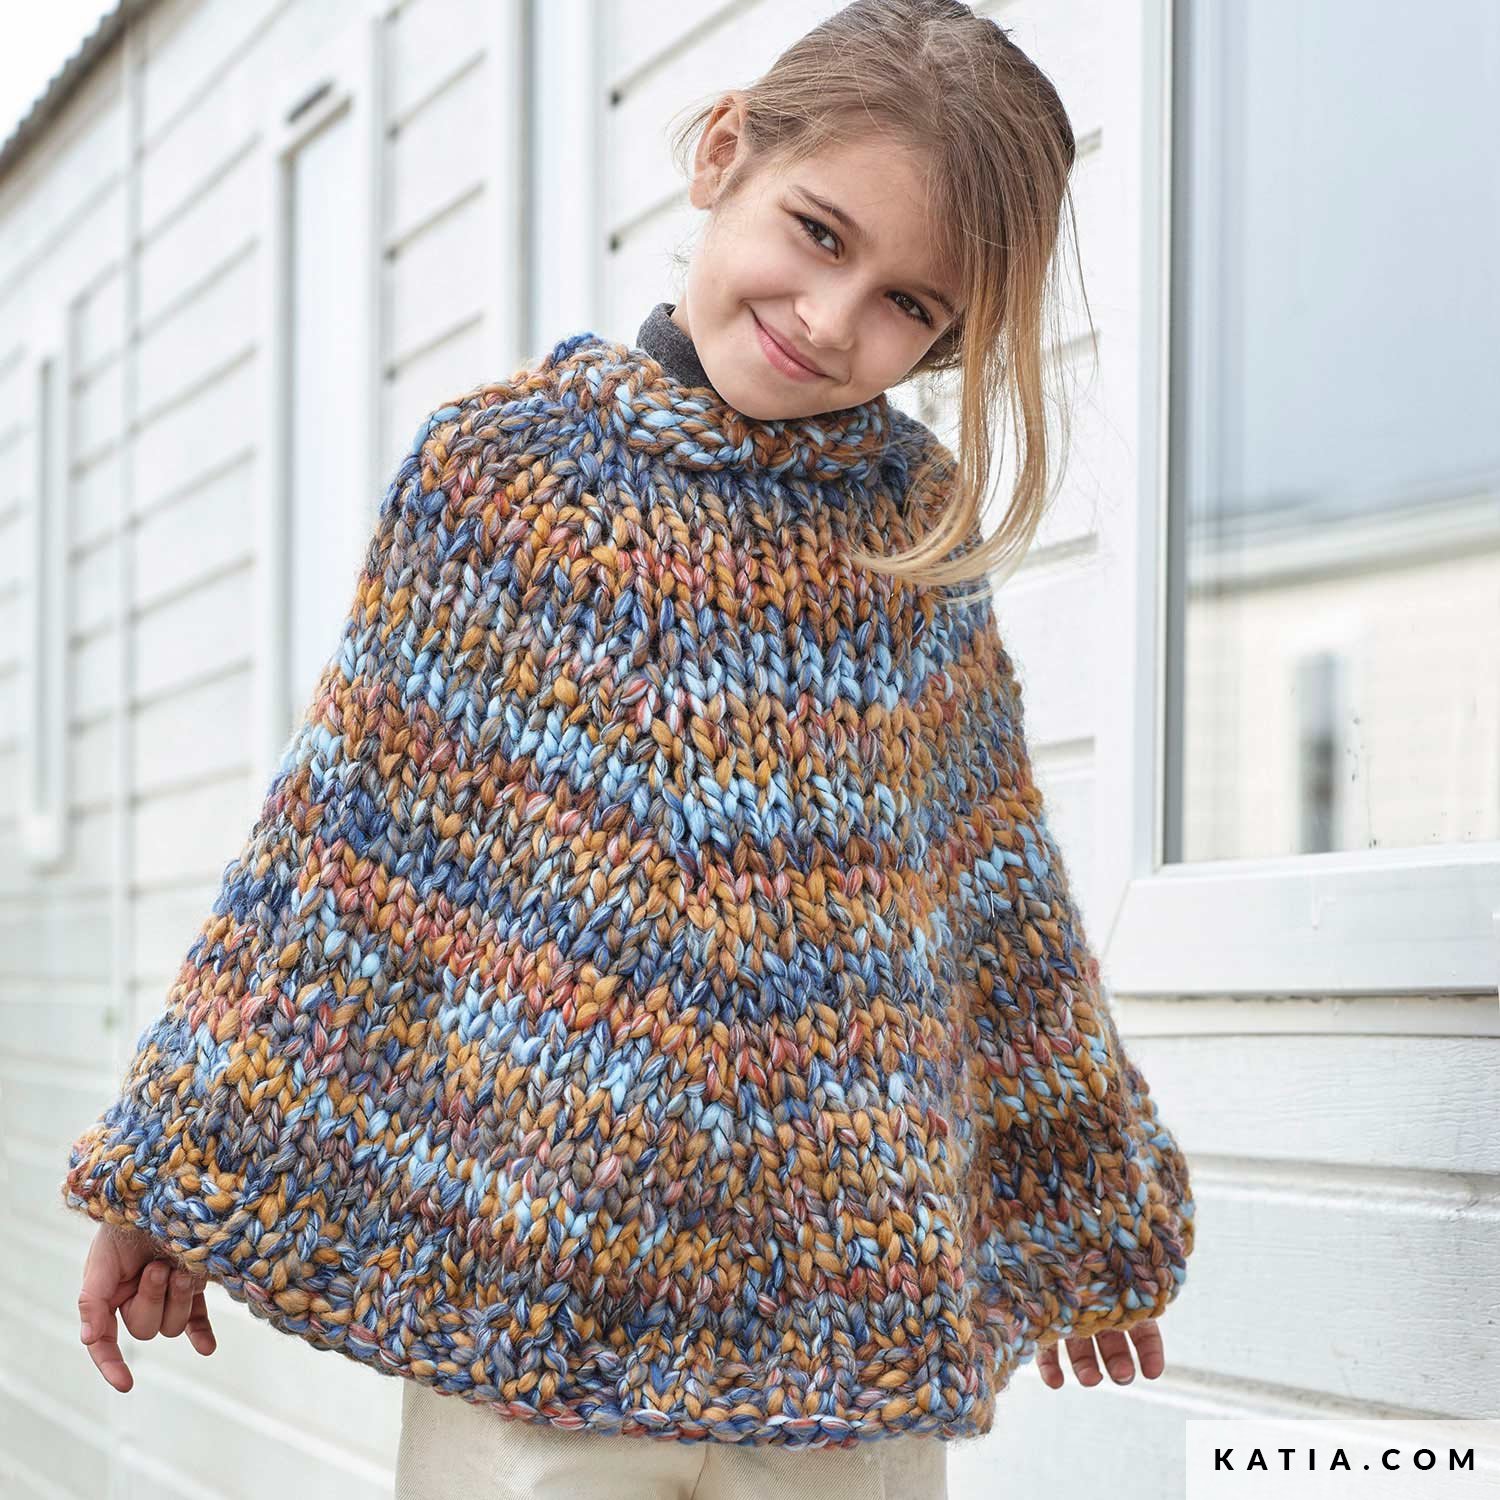 Poncho - Kids - Autumn / Winter - models & patterns | Katia.com